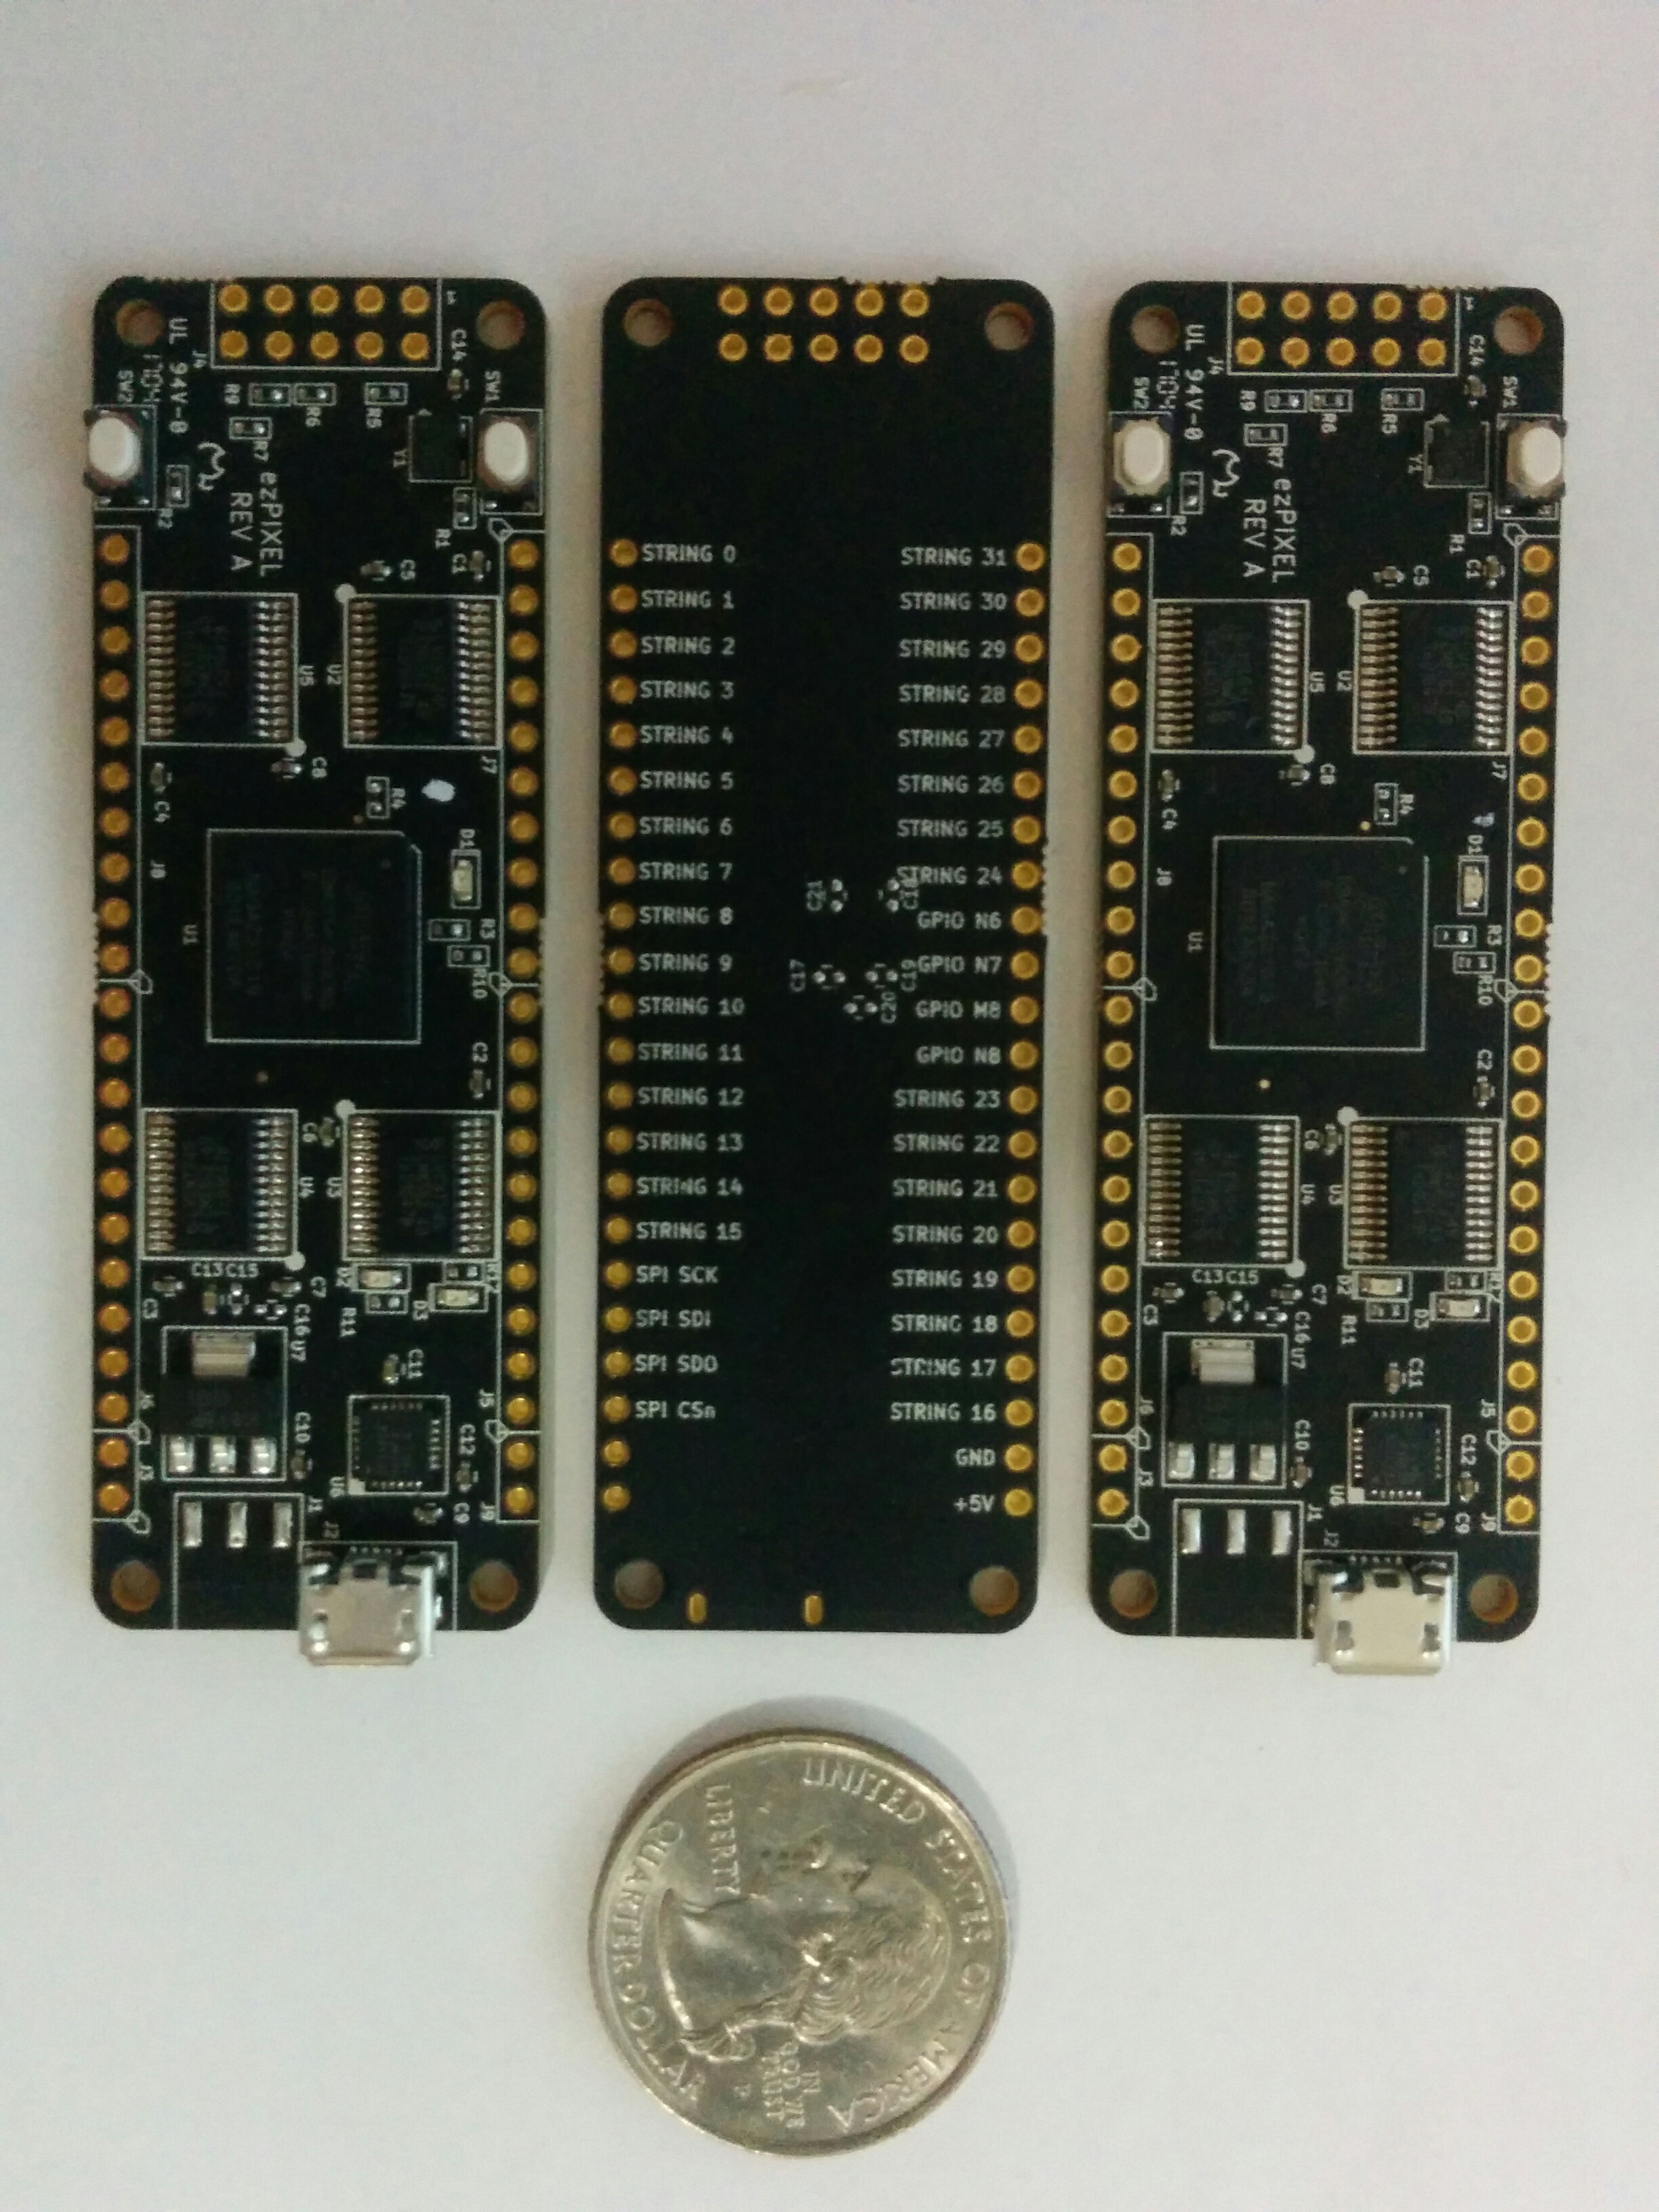 ezPIXEL :  Control over 9000 WS2812B pixels with one tiny FPGA board!